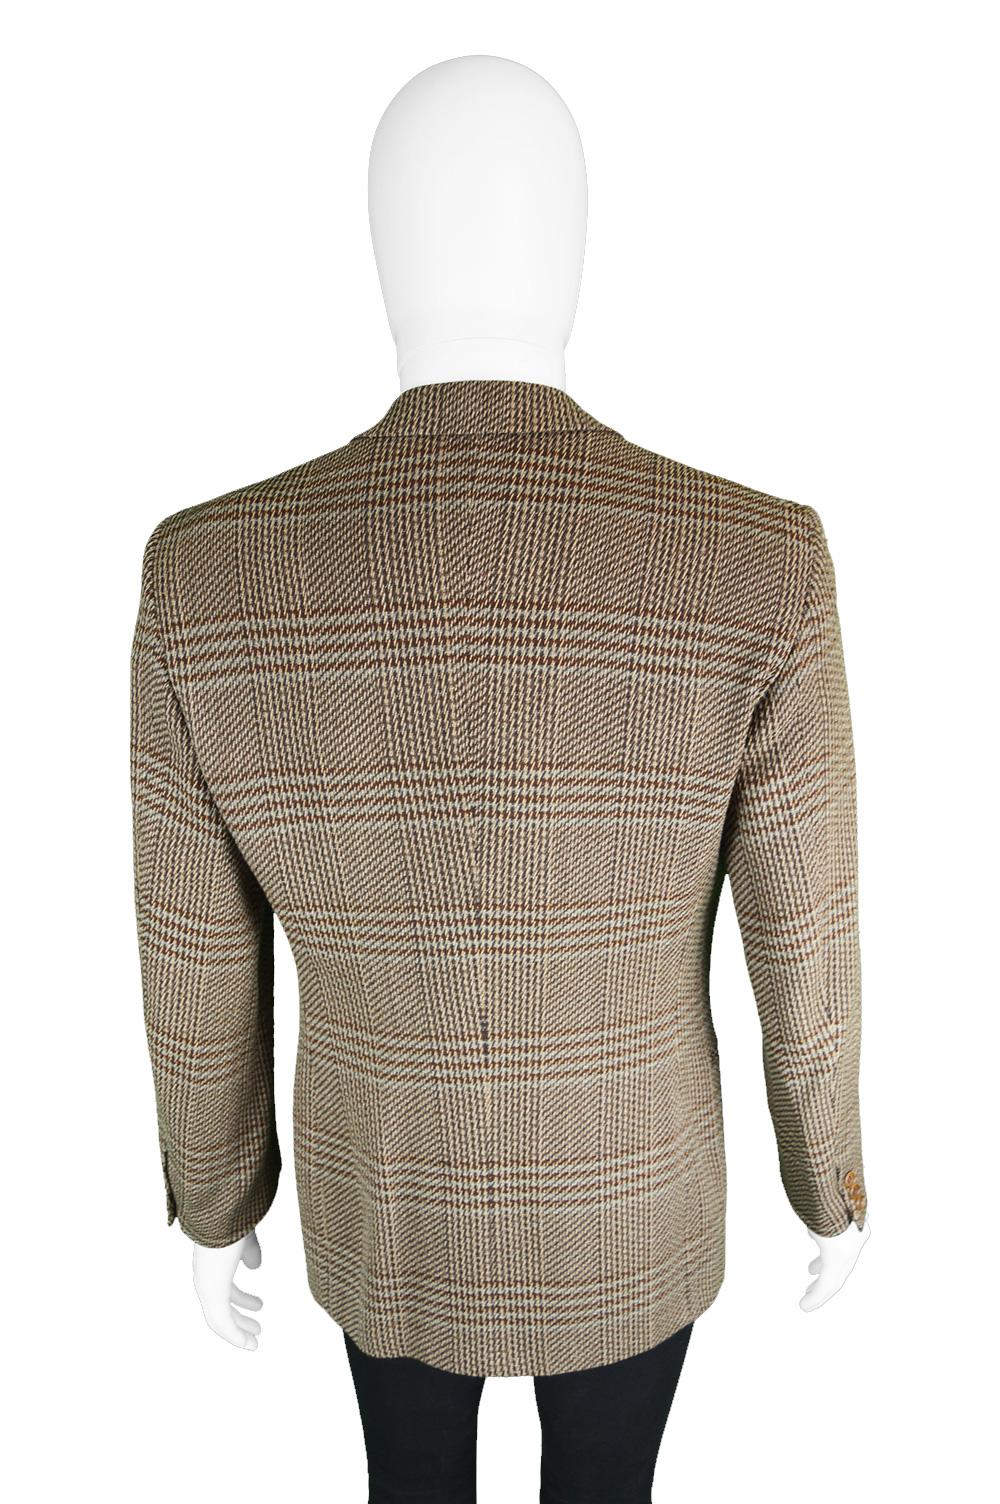 Giorgio Armani Men's Italian Wool Tweed Sportcoat Blazer Jacket, c. 1985 2